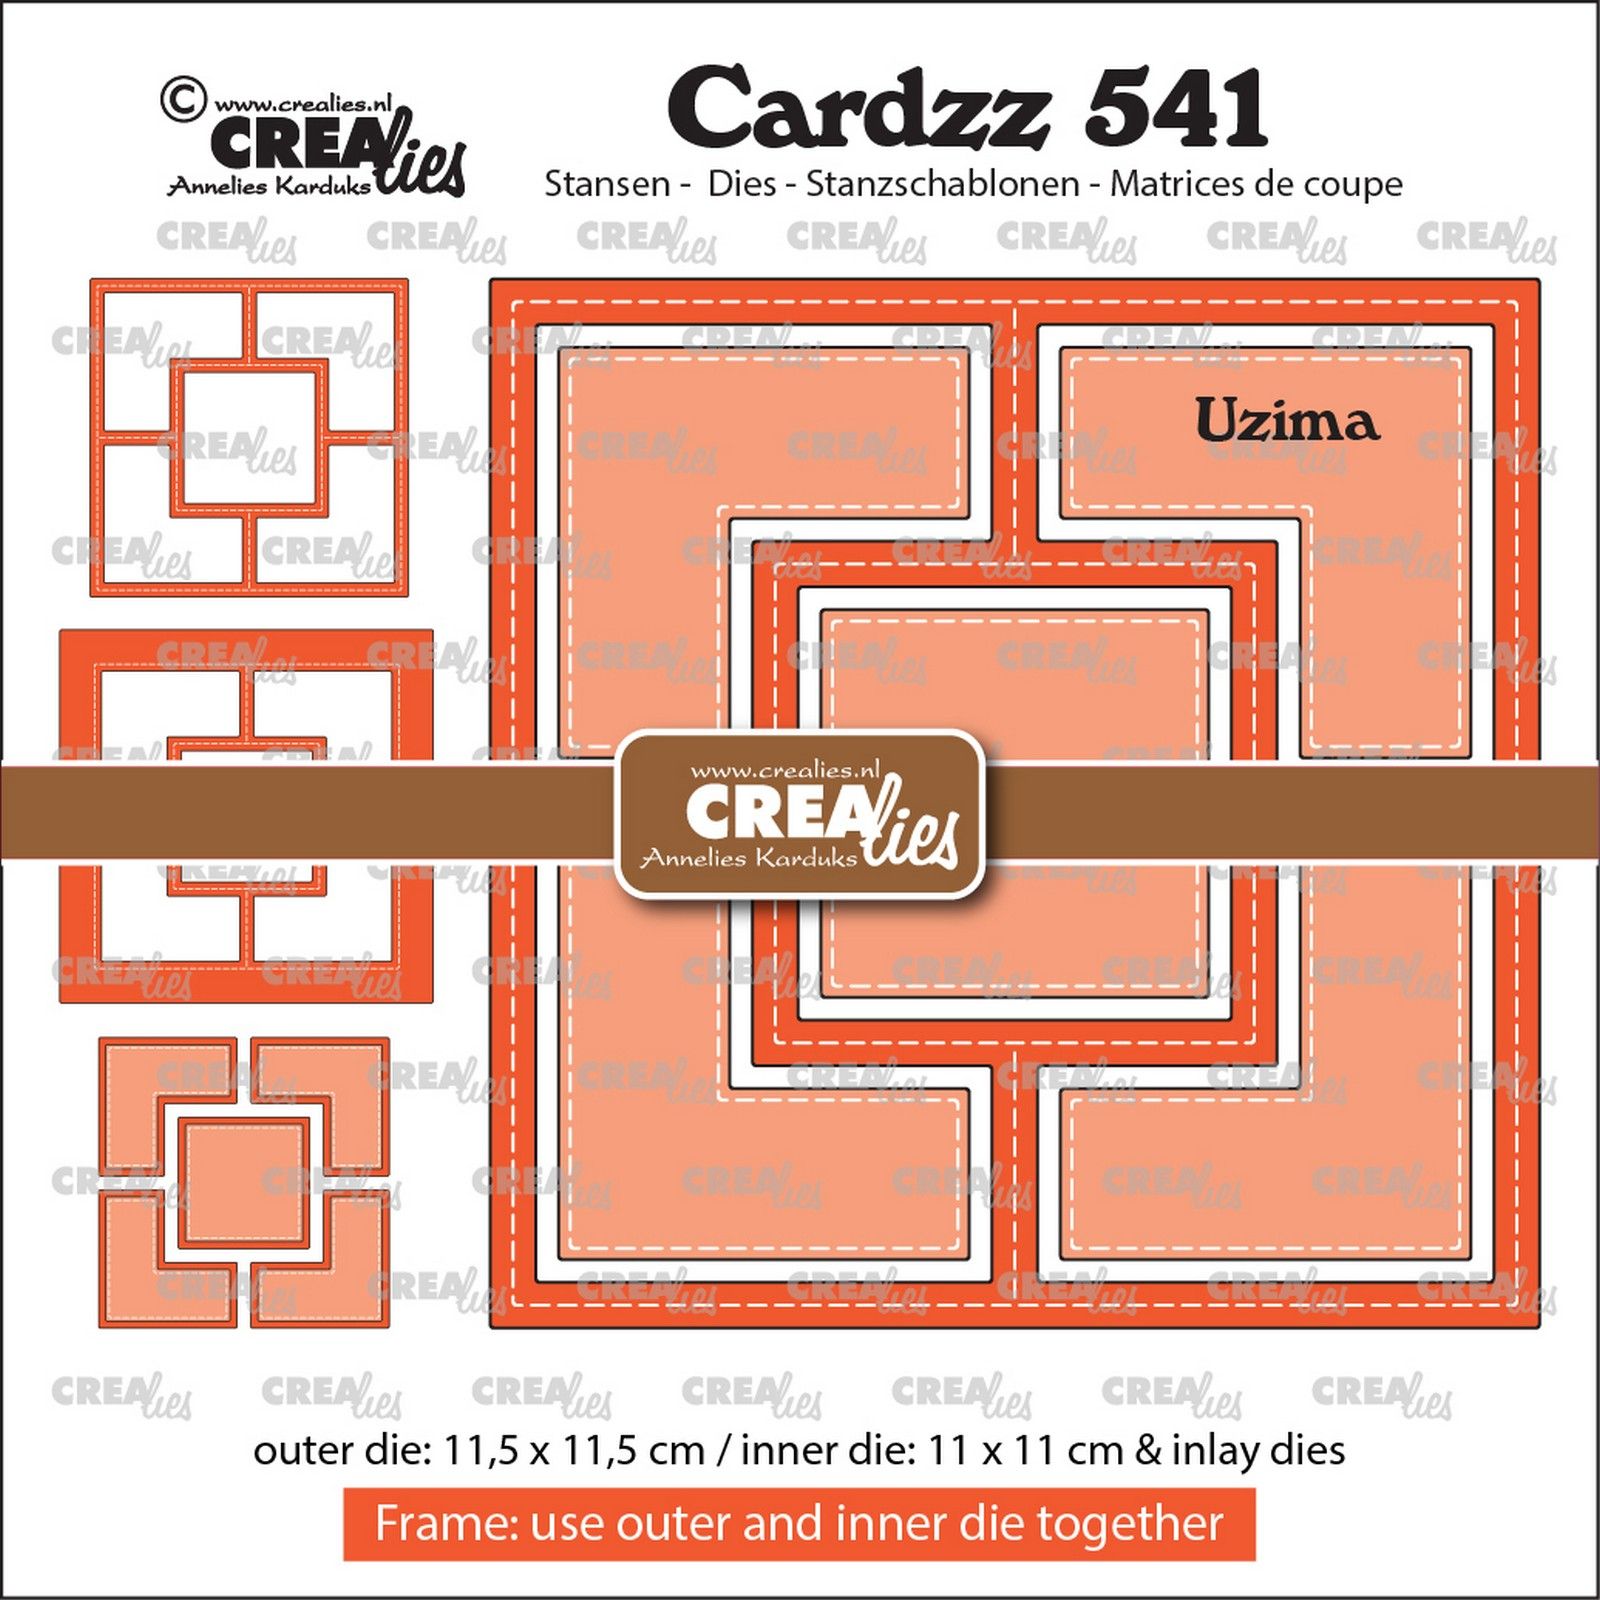 Crealies • Cardzz Frame & Inlays Uzima (square with 4 corners around it)